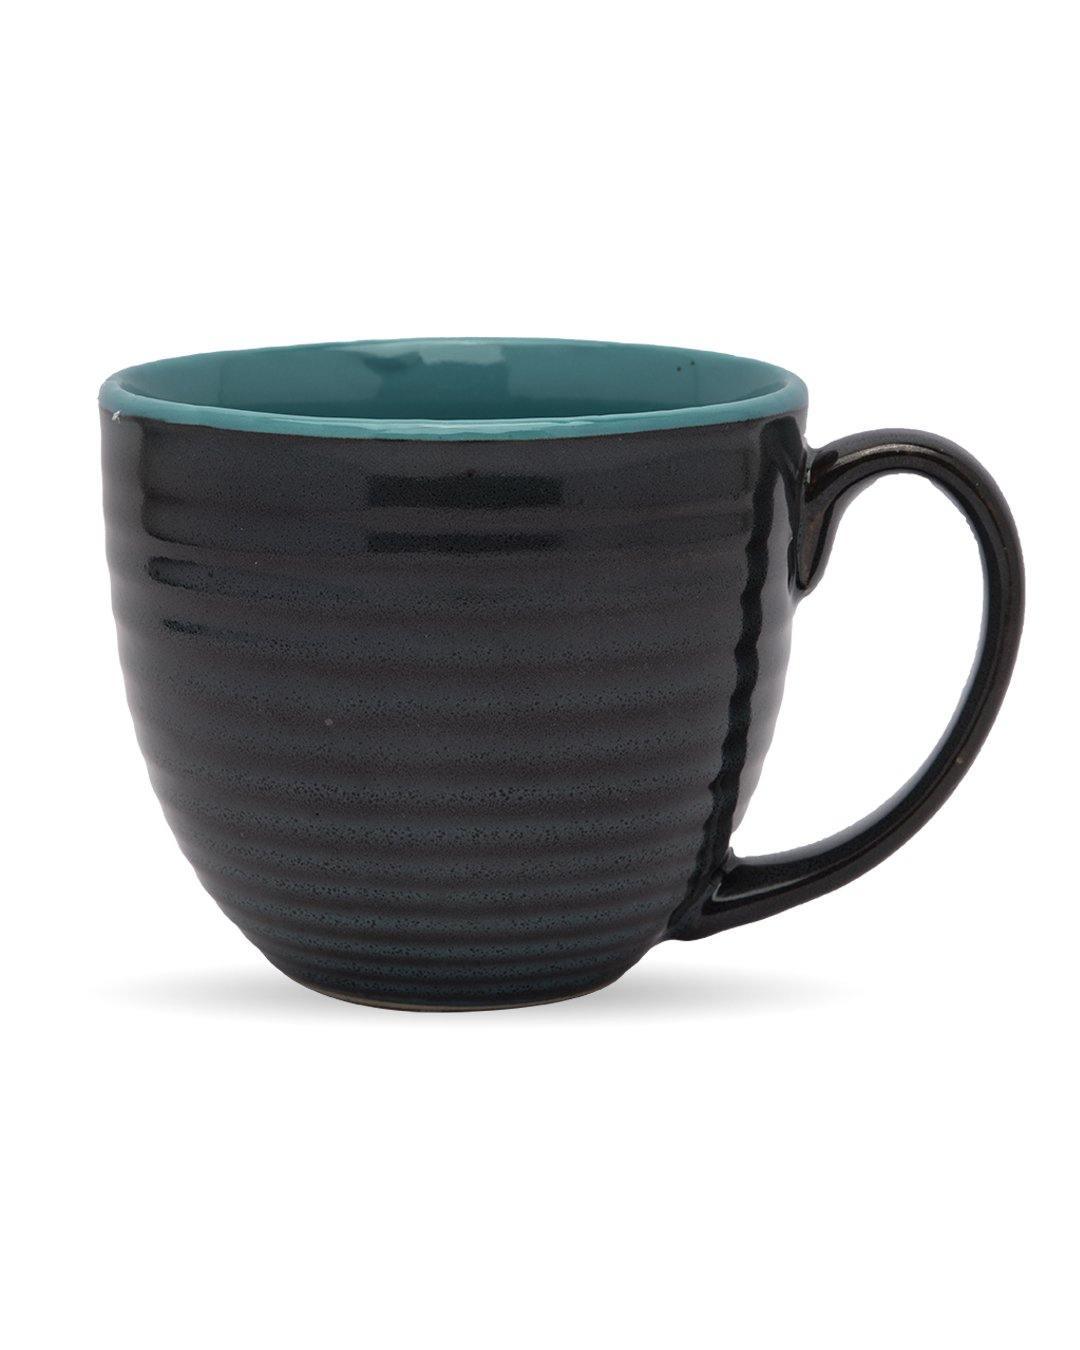 Studio Pottery Cup, Turquoise, Ceramic, 380 mL - MARKET 99